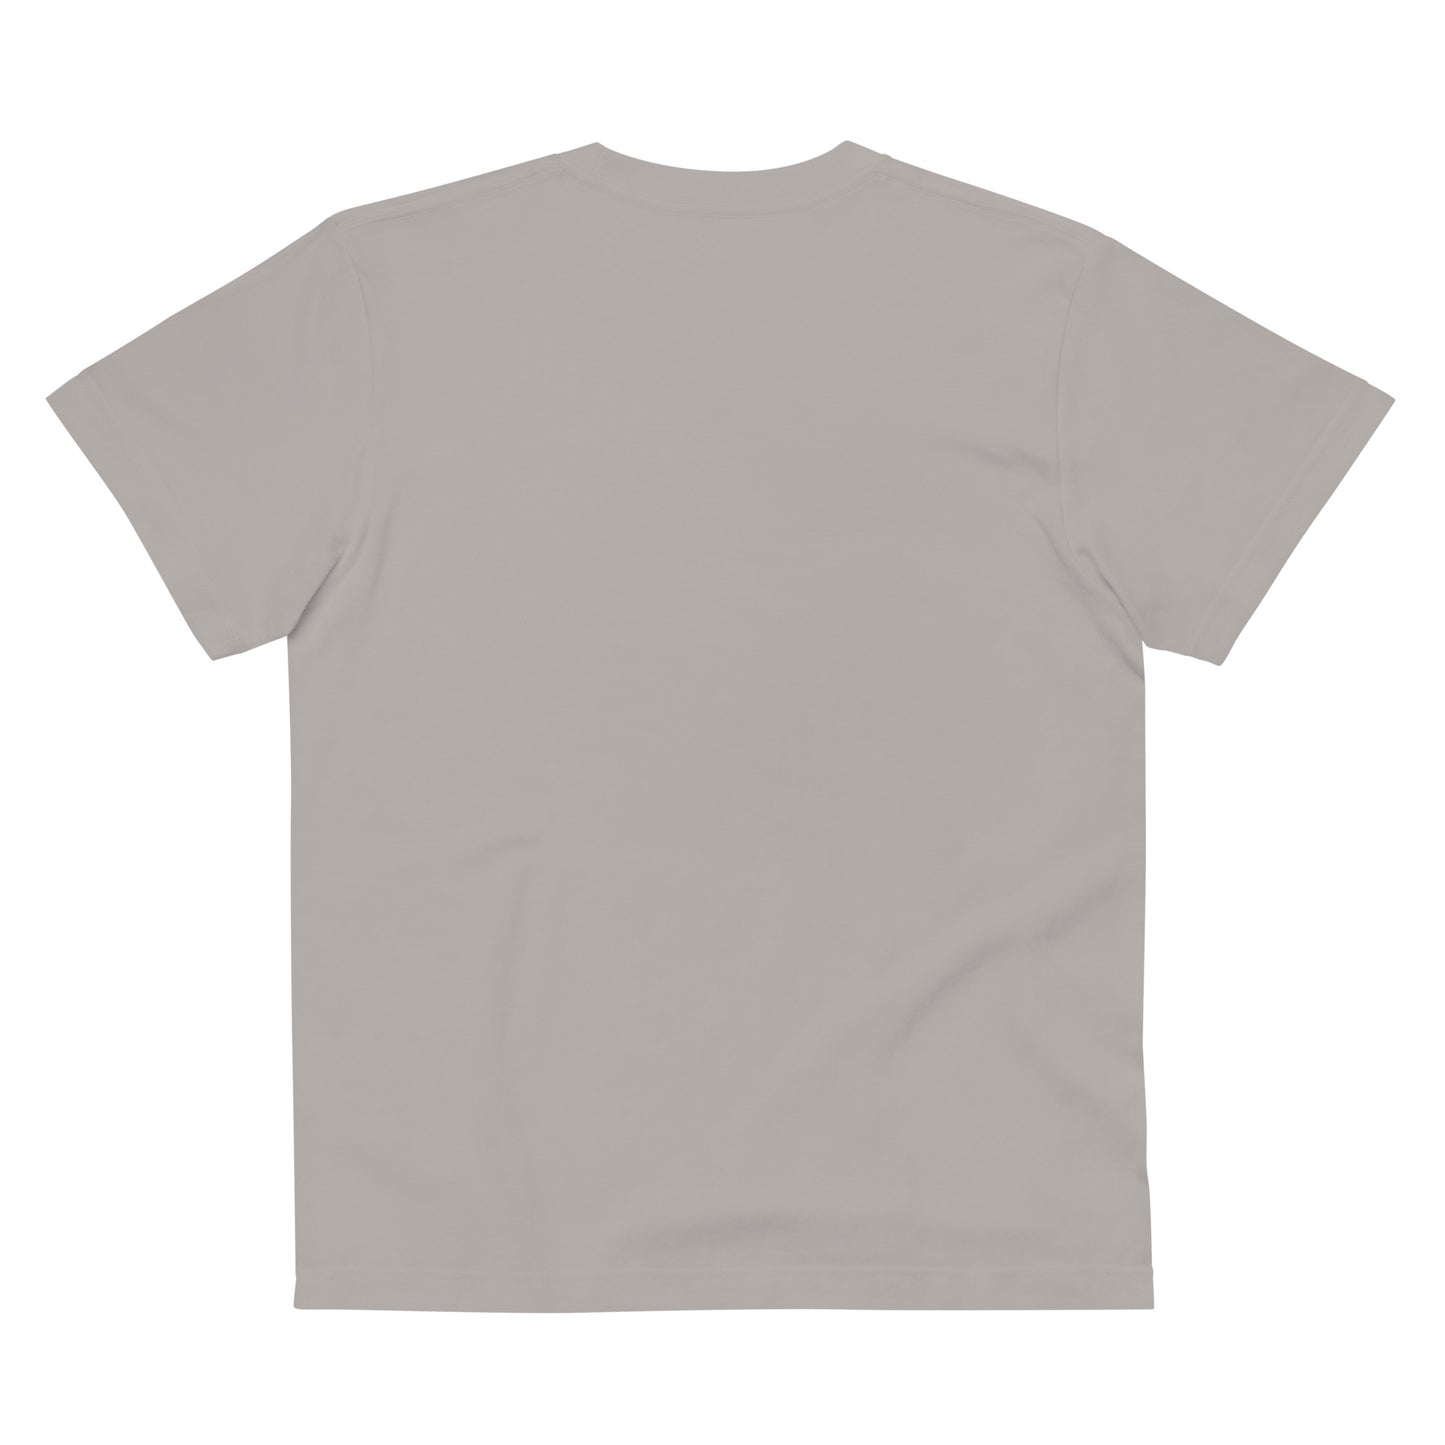 E037 - เสื้อยืด/รูปร่างมาตรฐาน (วิบากชนะ : สีเทา/สีเทาชาร์โคล)